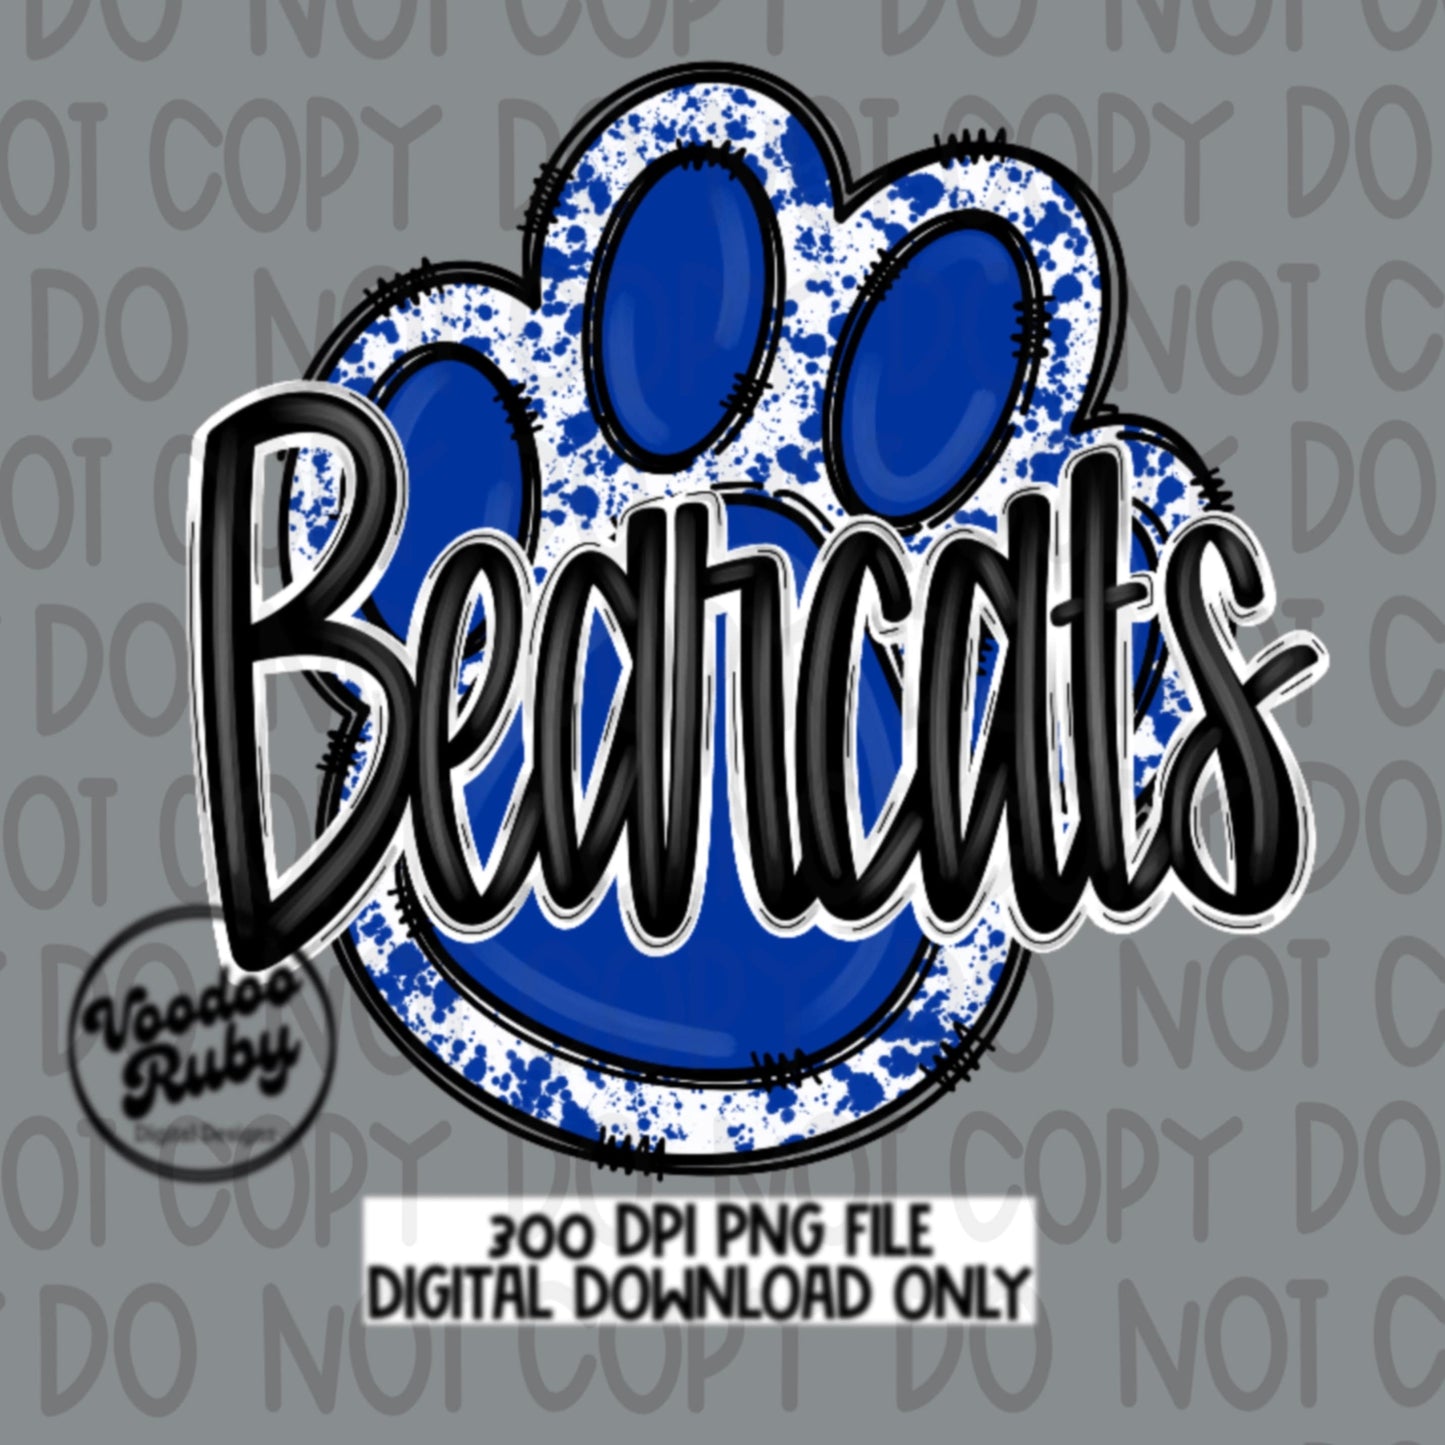 Bearcats PNG Design Hand Drawn Digital Download Sublimation Football PNG Blue Paw Print Bearcats Football DTF Printable